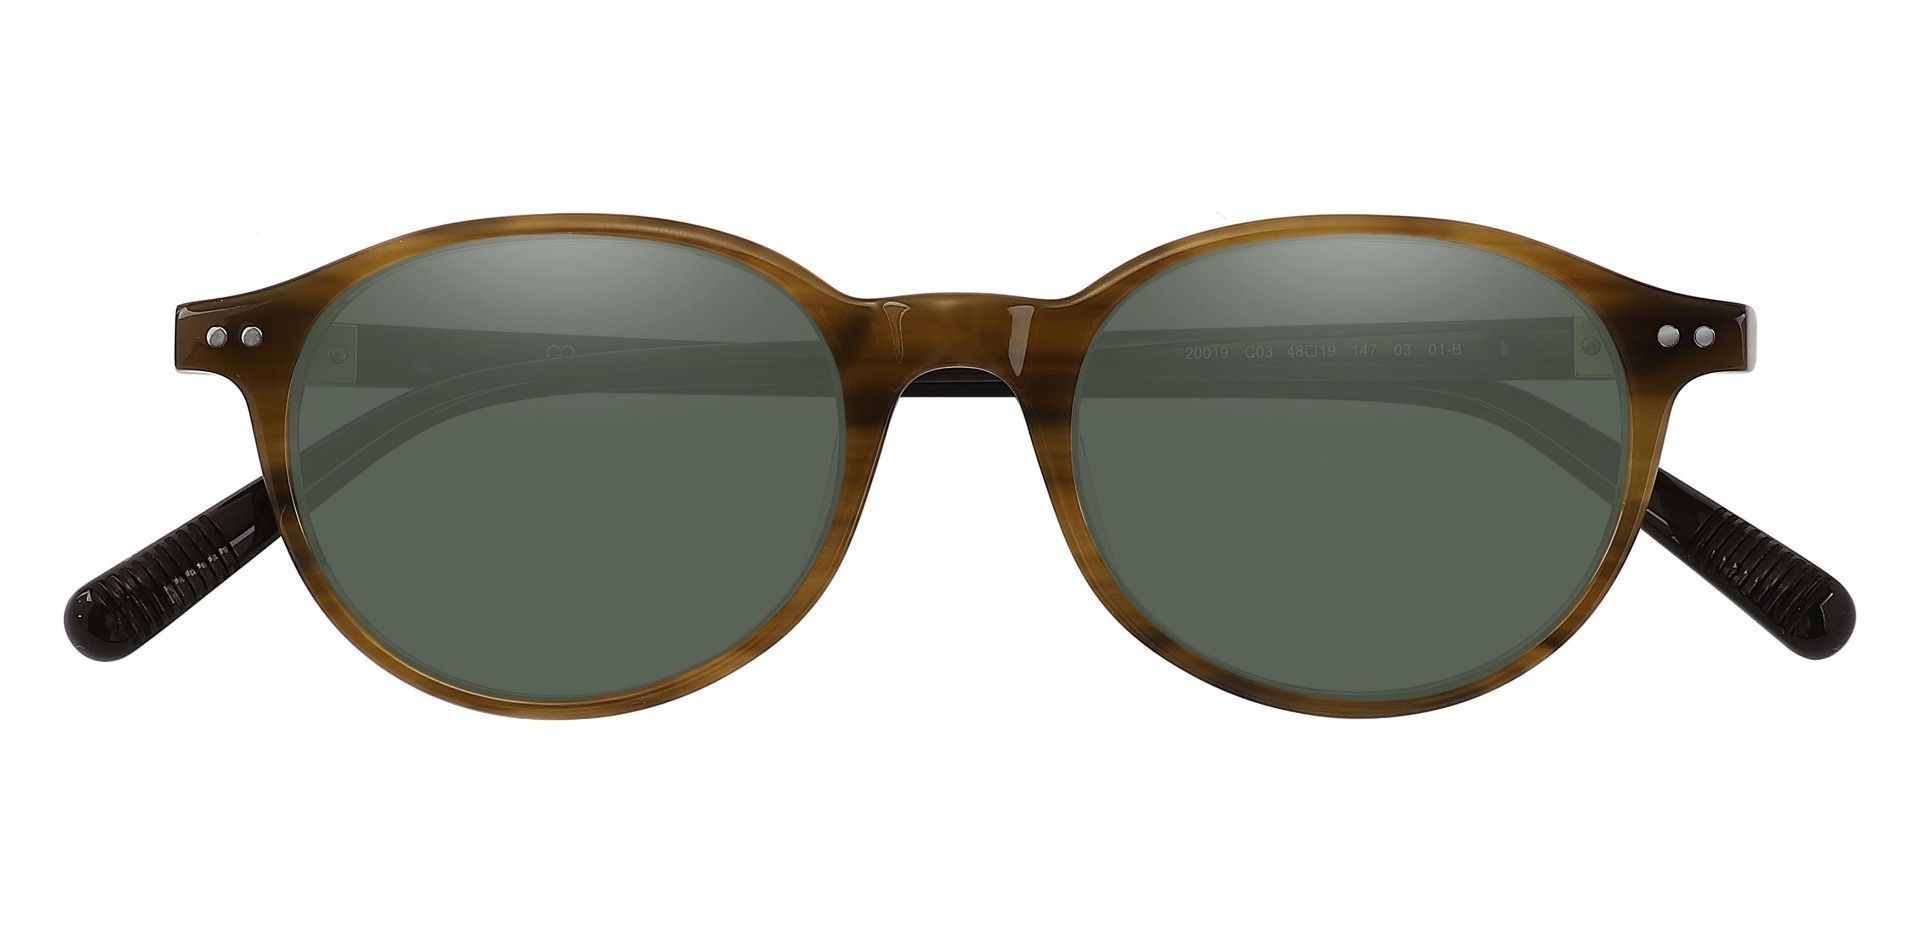 Avon Oval Prescription Sunglasses - Brown Frame With Green Lenses